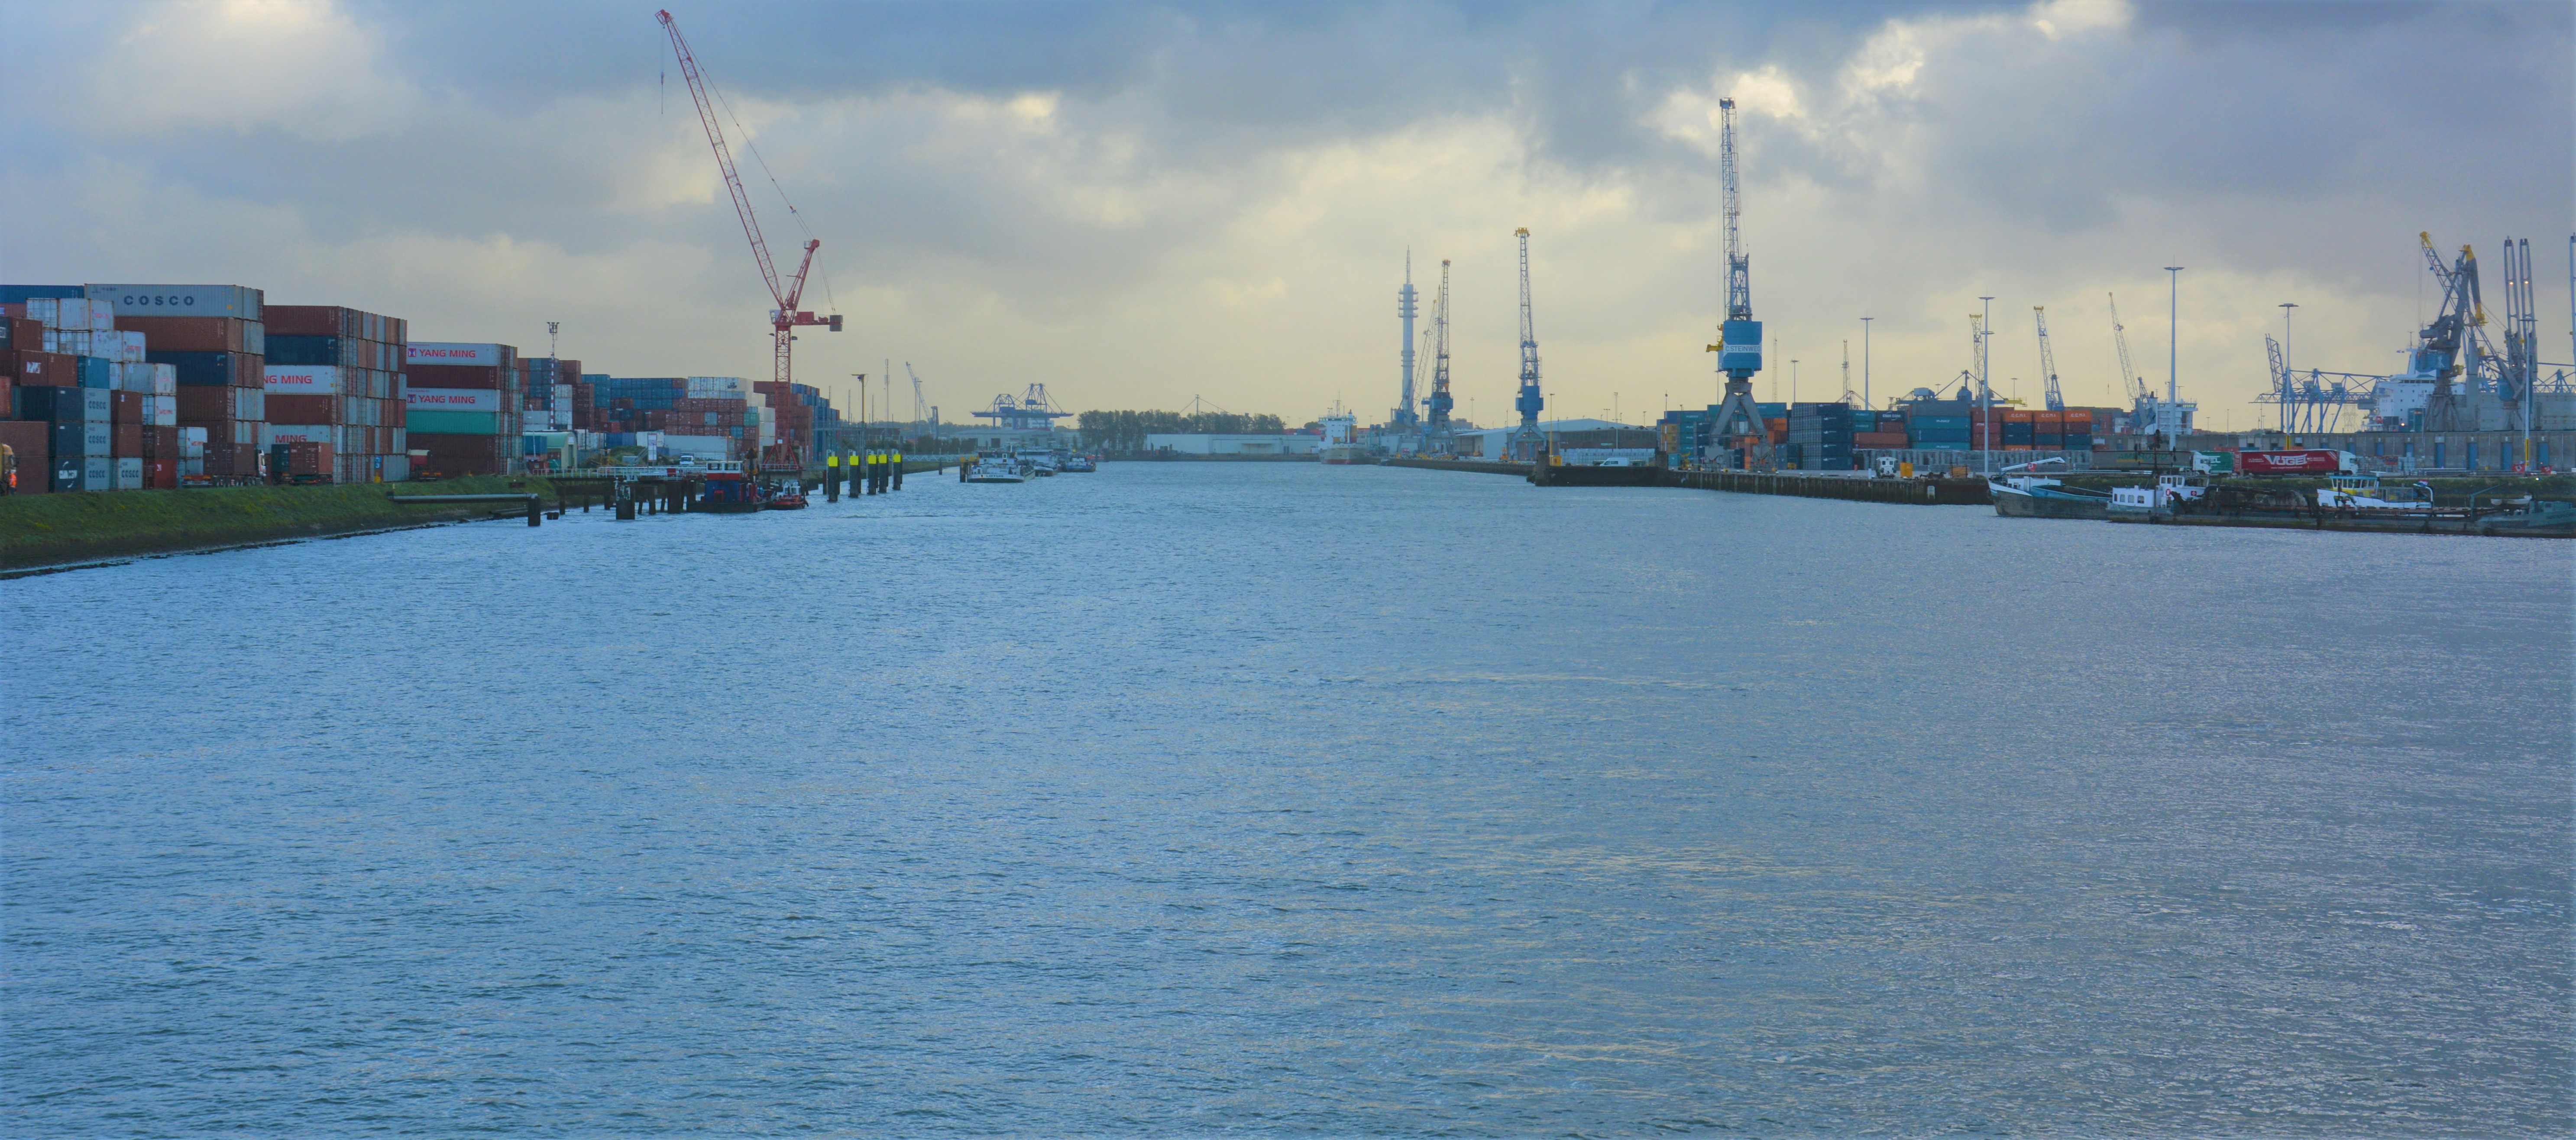 Port of Rotterdam; Illustration